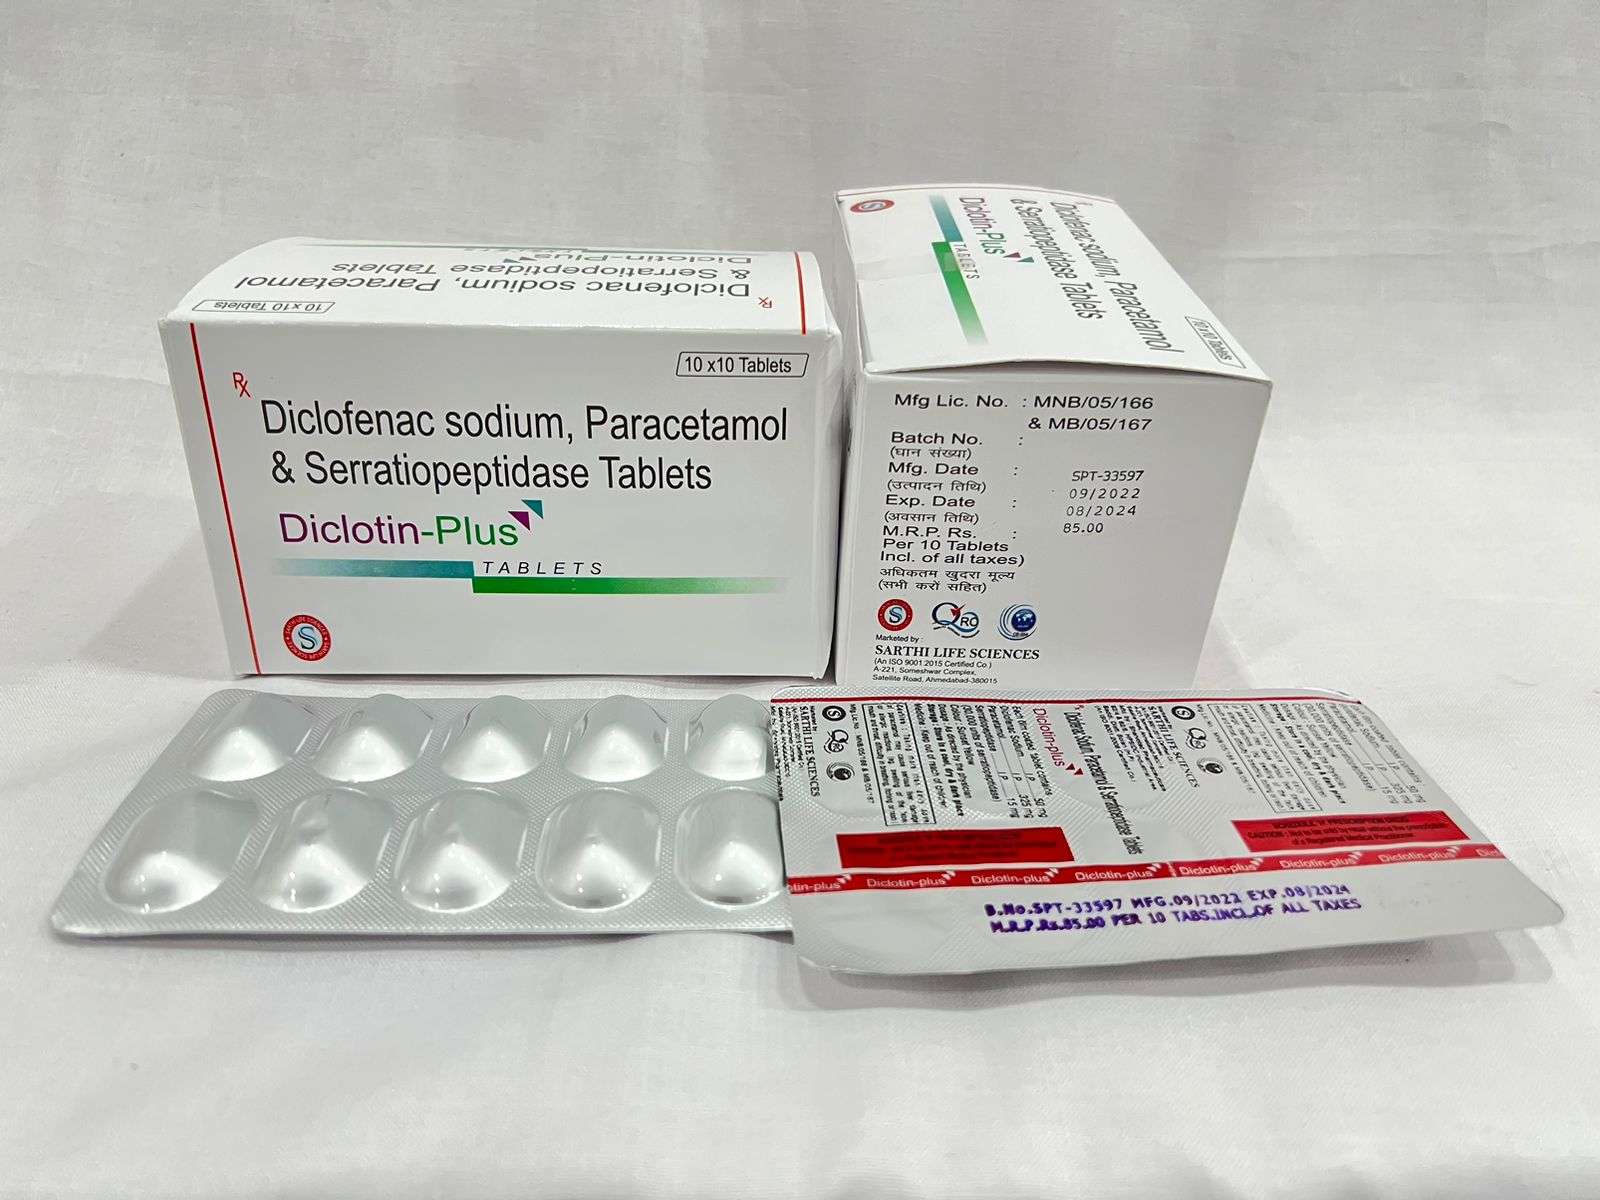 diclofenac sodium 50 mg+ paracetamol 325 mg +
serratiopeptidase 15 mg